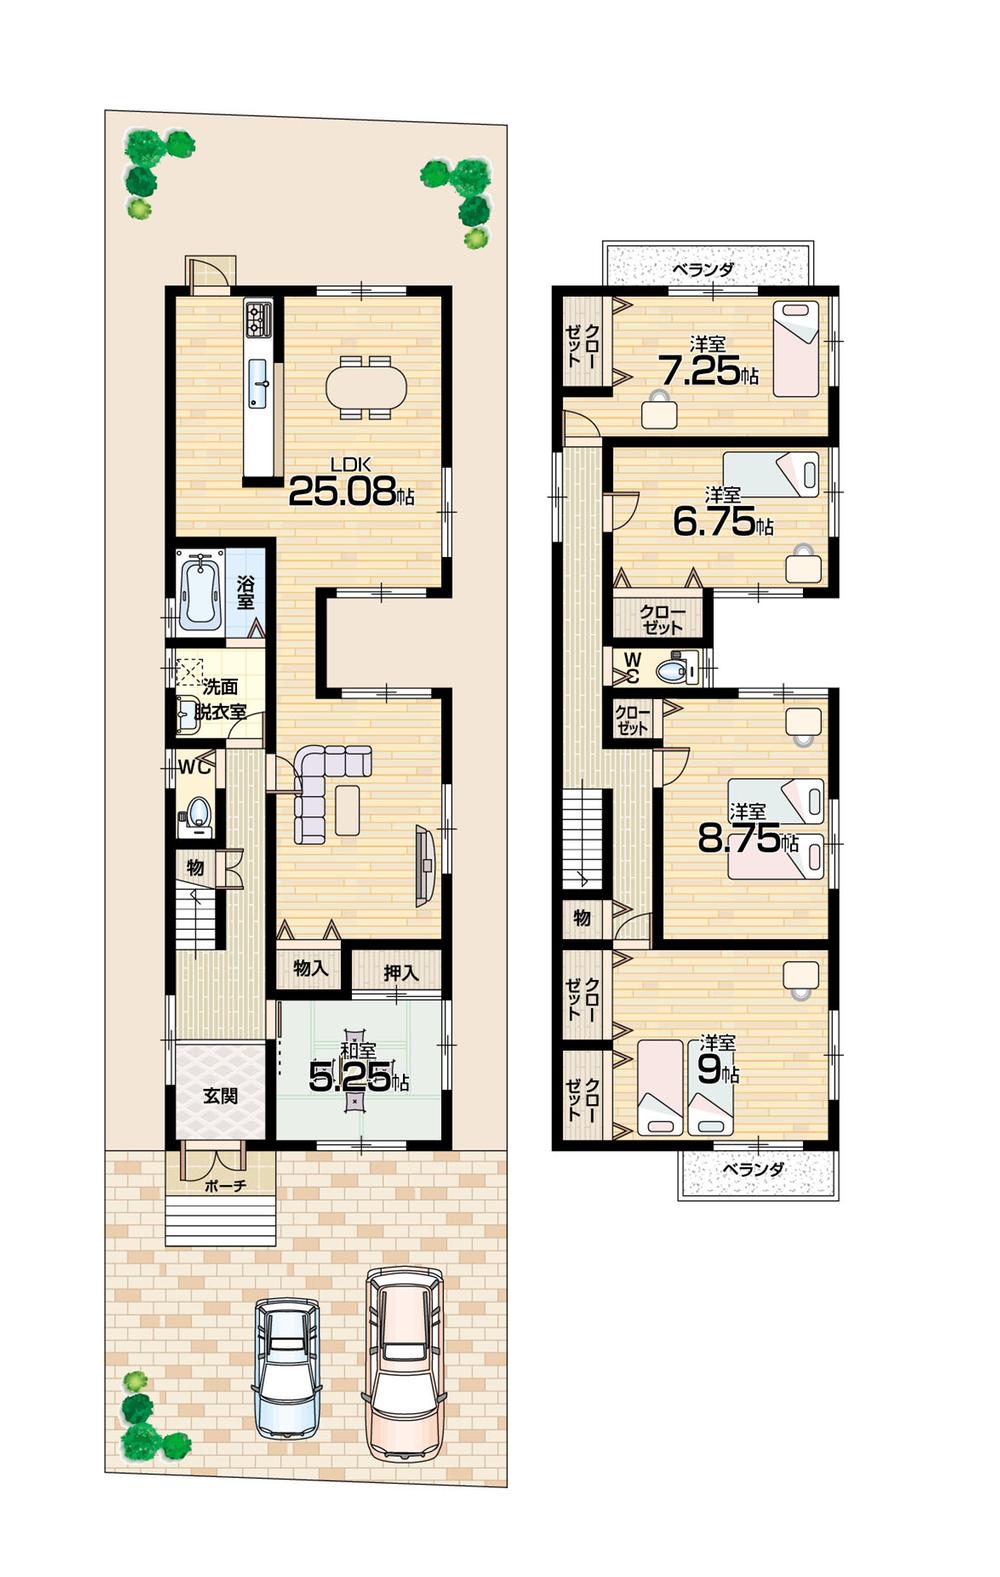 Floor plan. (No. 1 point), Price 32,100,000 yen, 5LDK, Land area 173.46 sq m , Building area 143.38 sq m